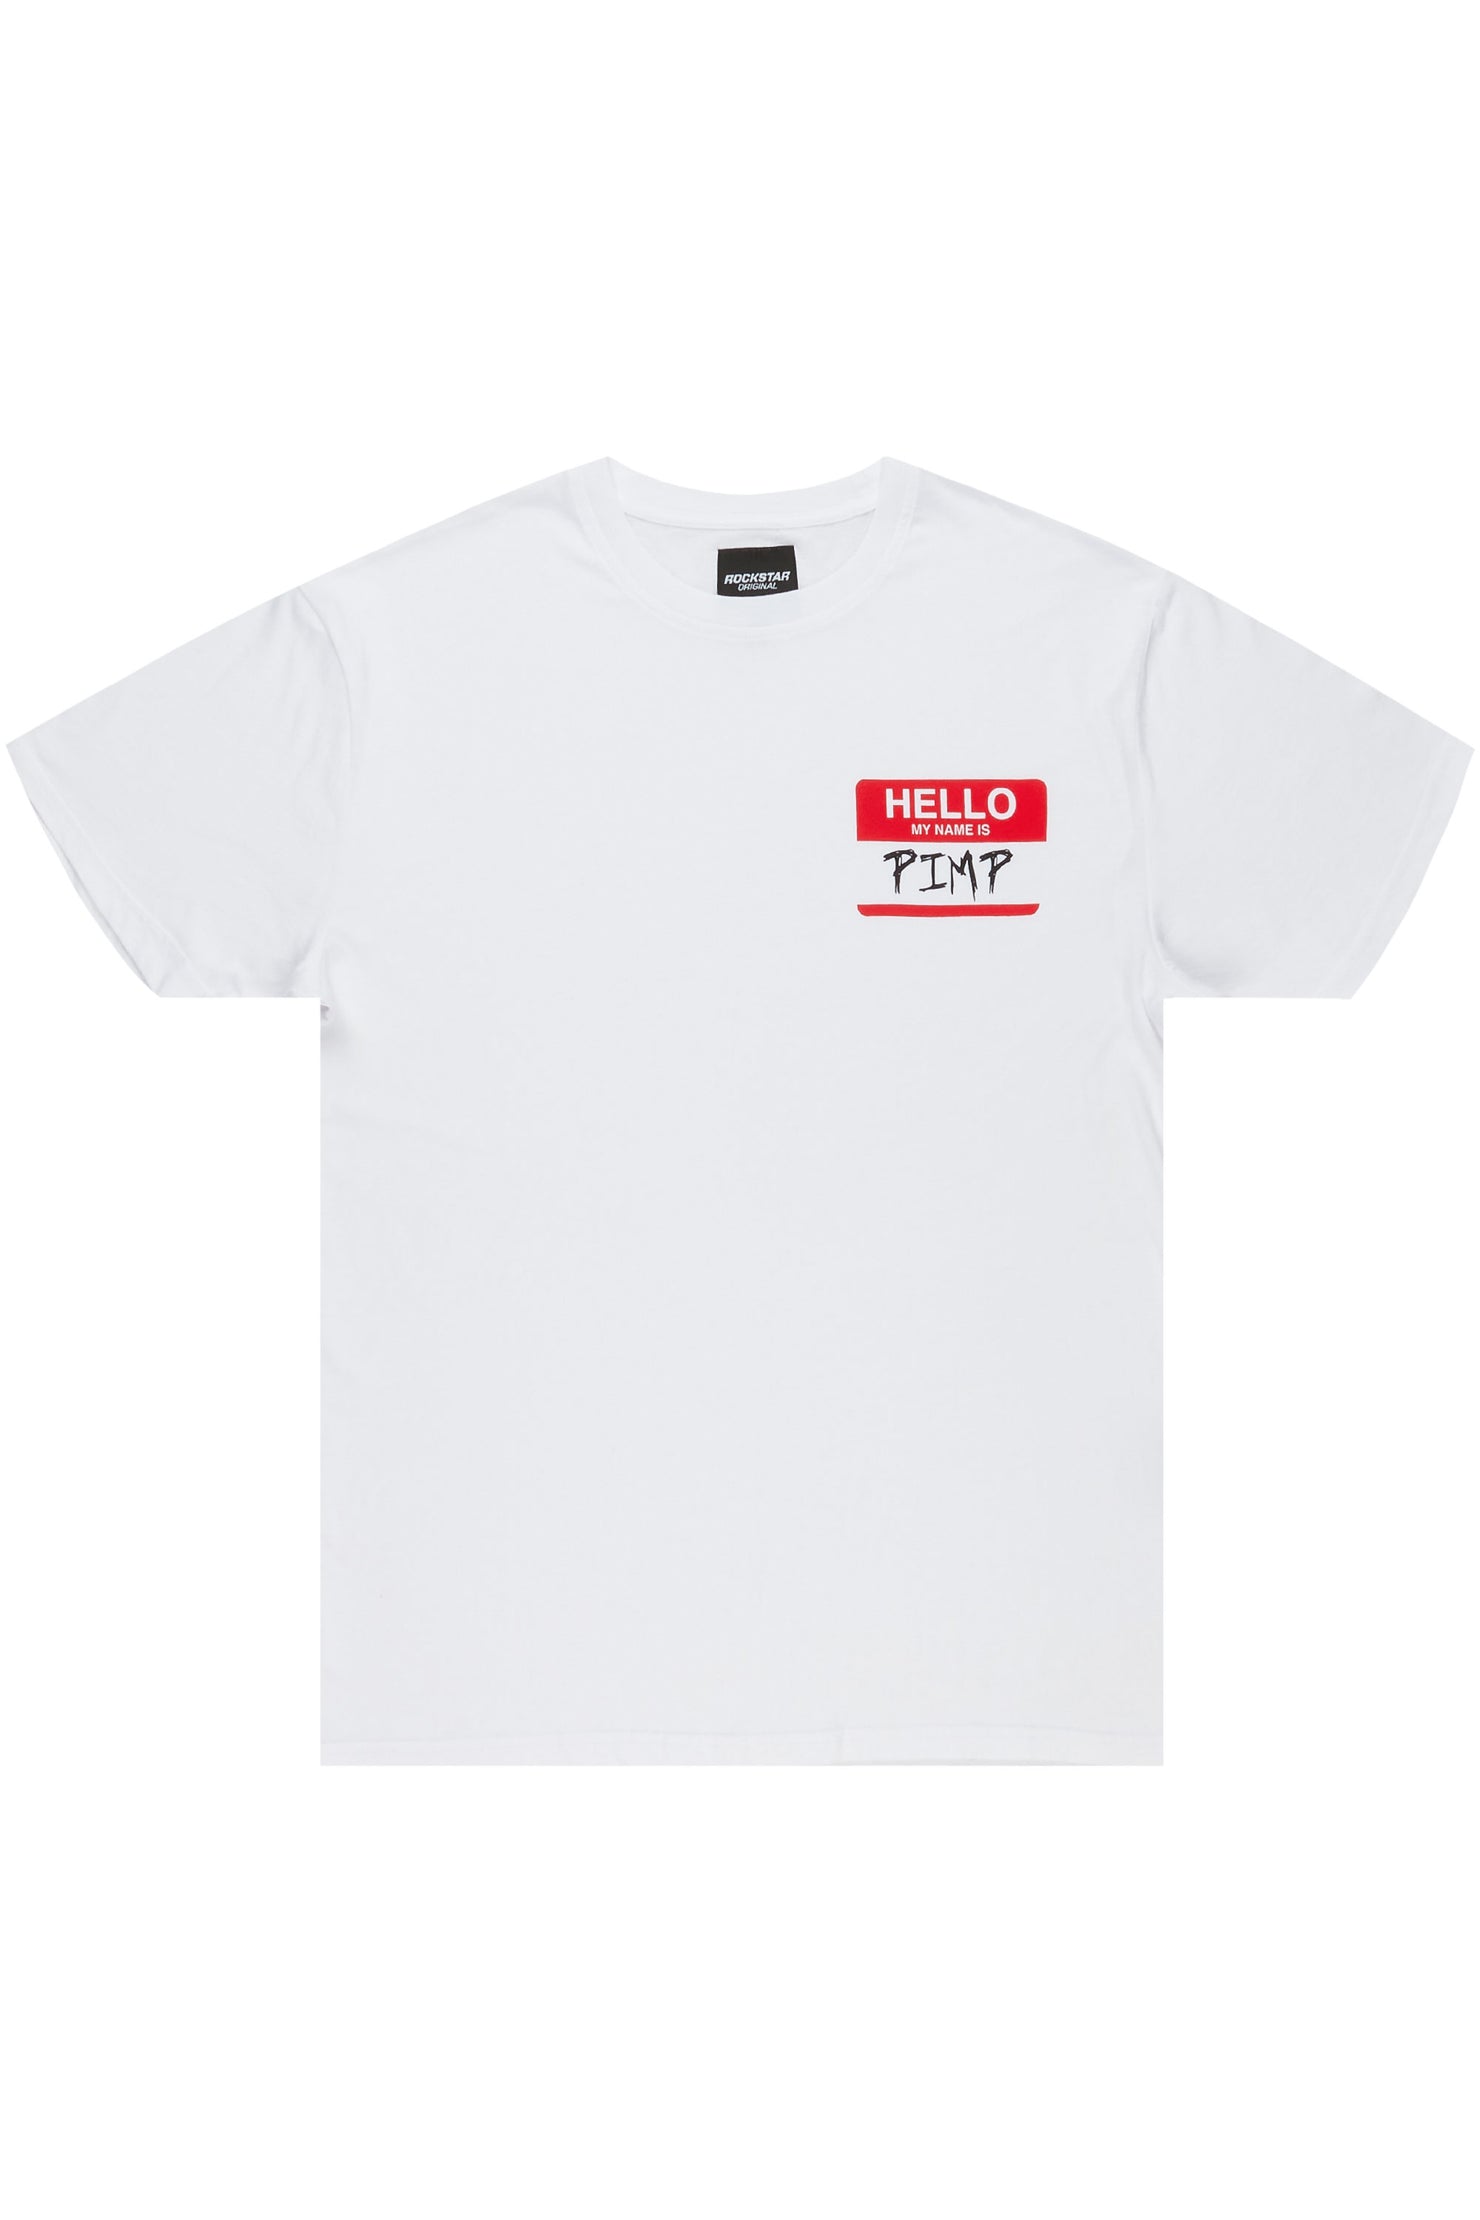 Noah White Graphic T-Shirt